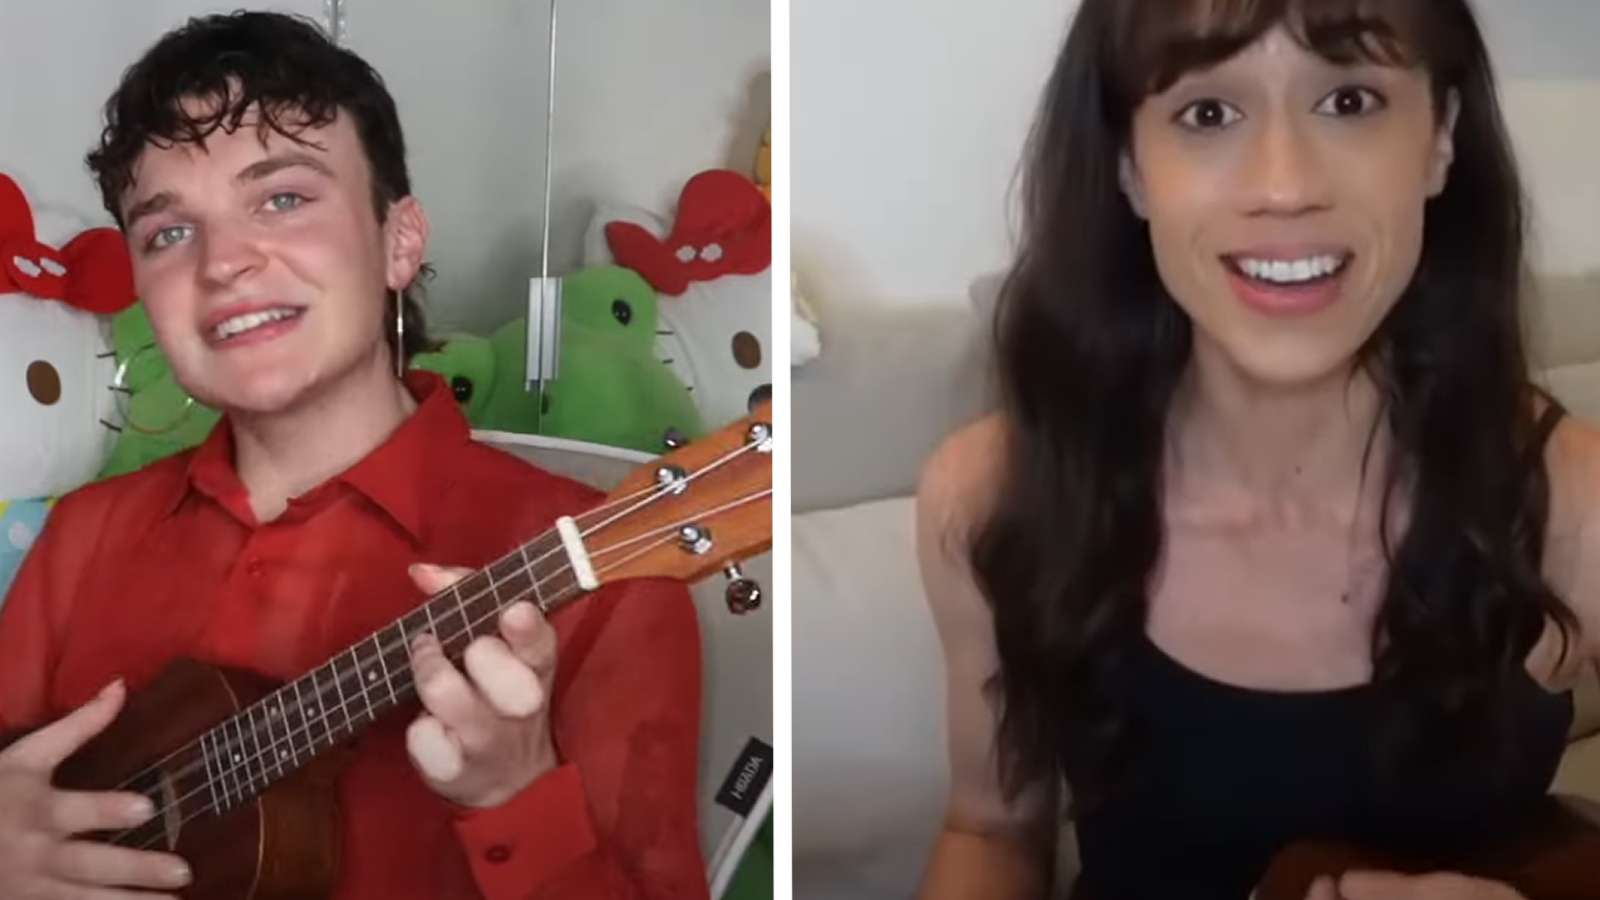 Adam McIntyre mocks Colleen Ballinger’s musical apology with own ukulele response